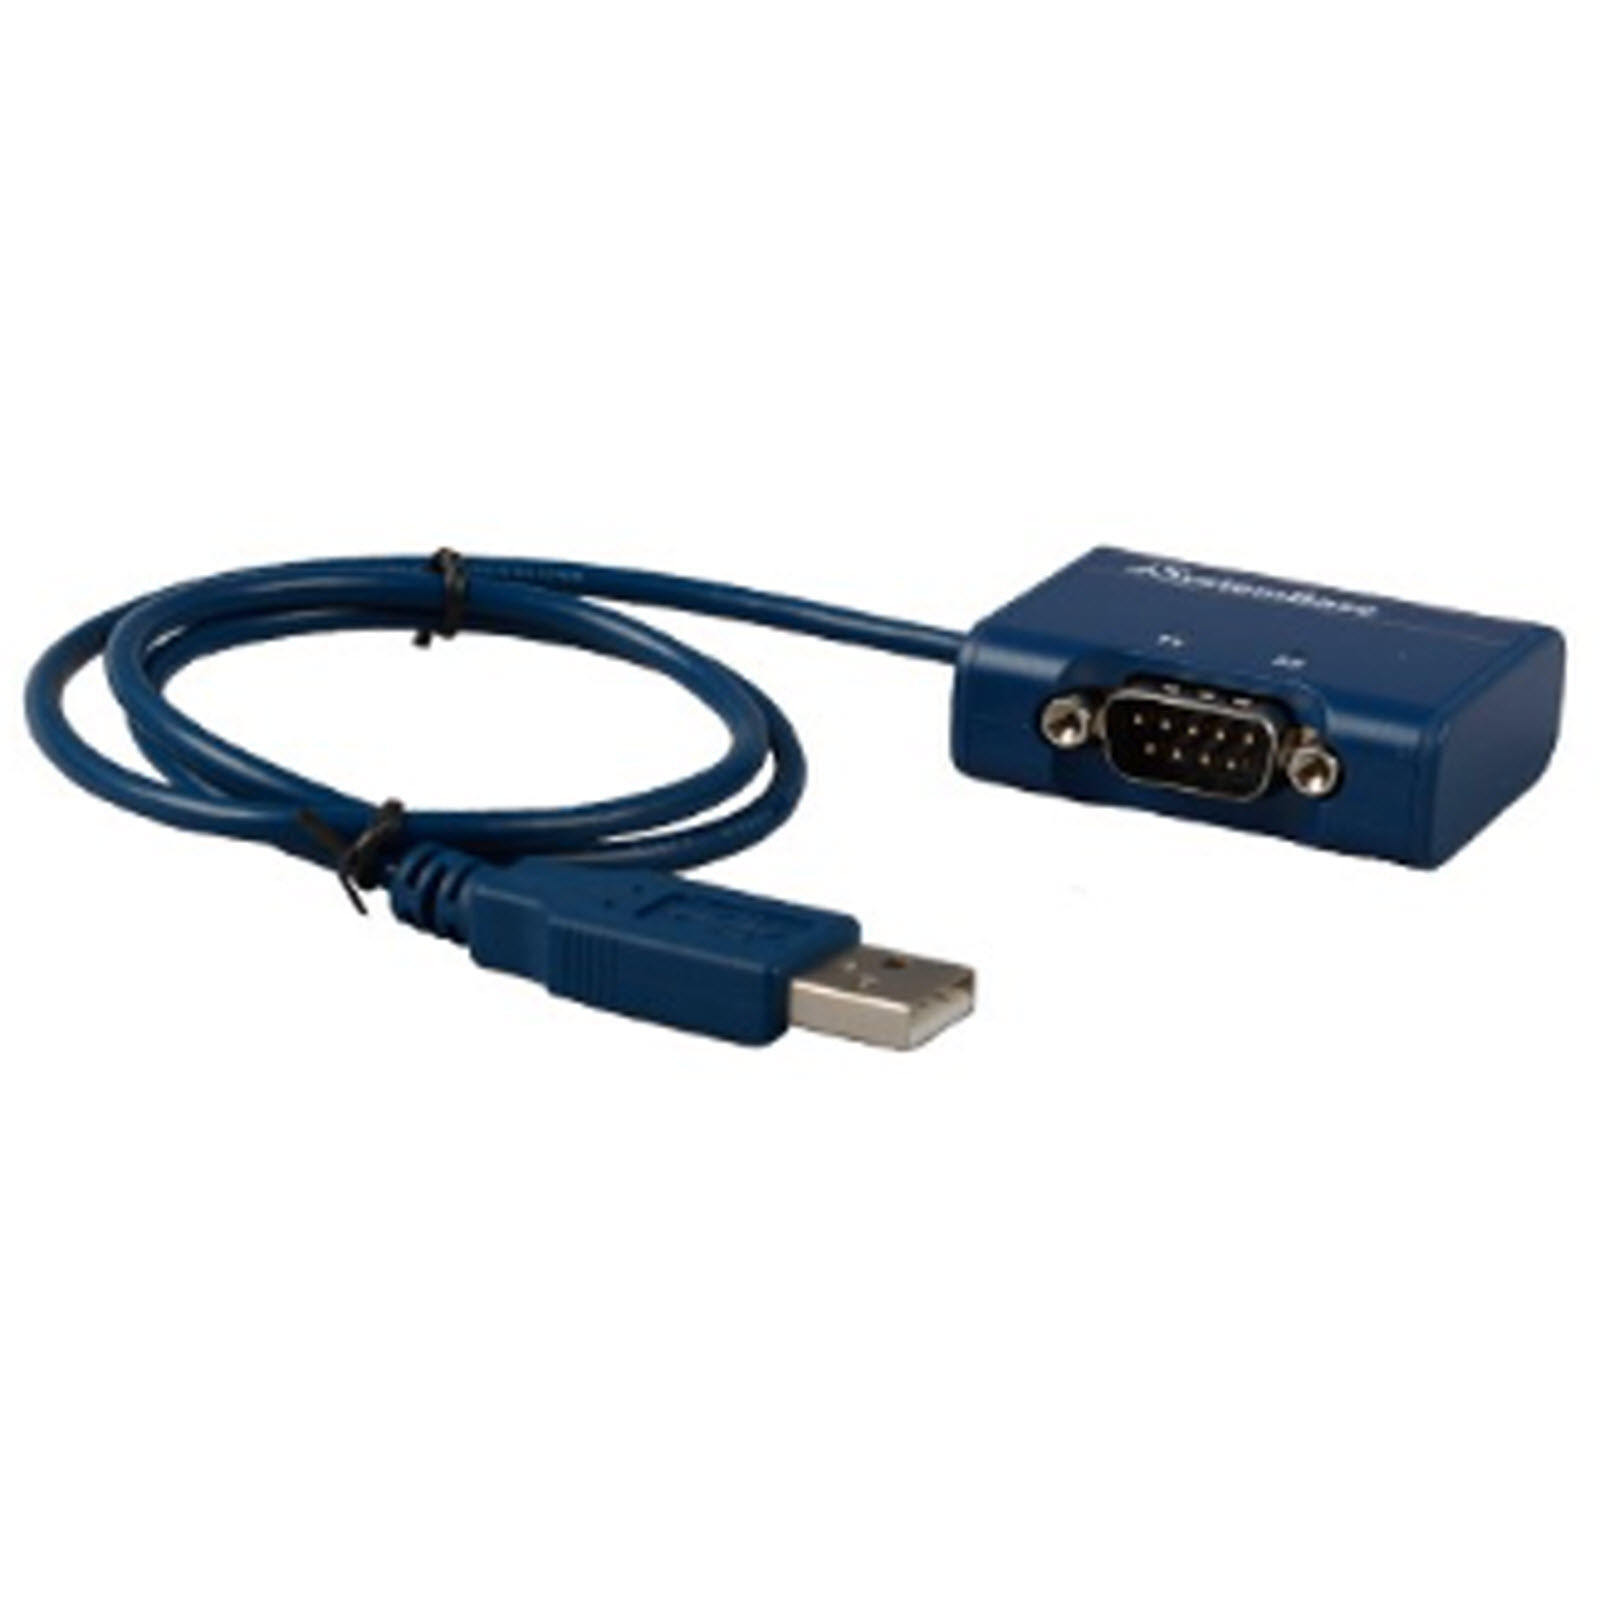 Systembase Multi - 1/USB RS232 Convertidor De Puerto Usb A 1 RS232